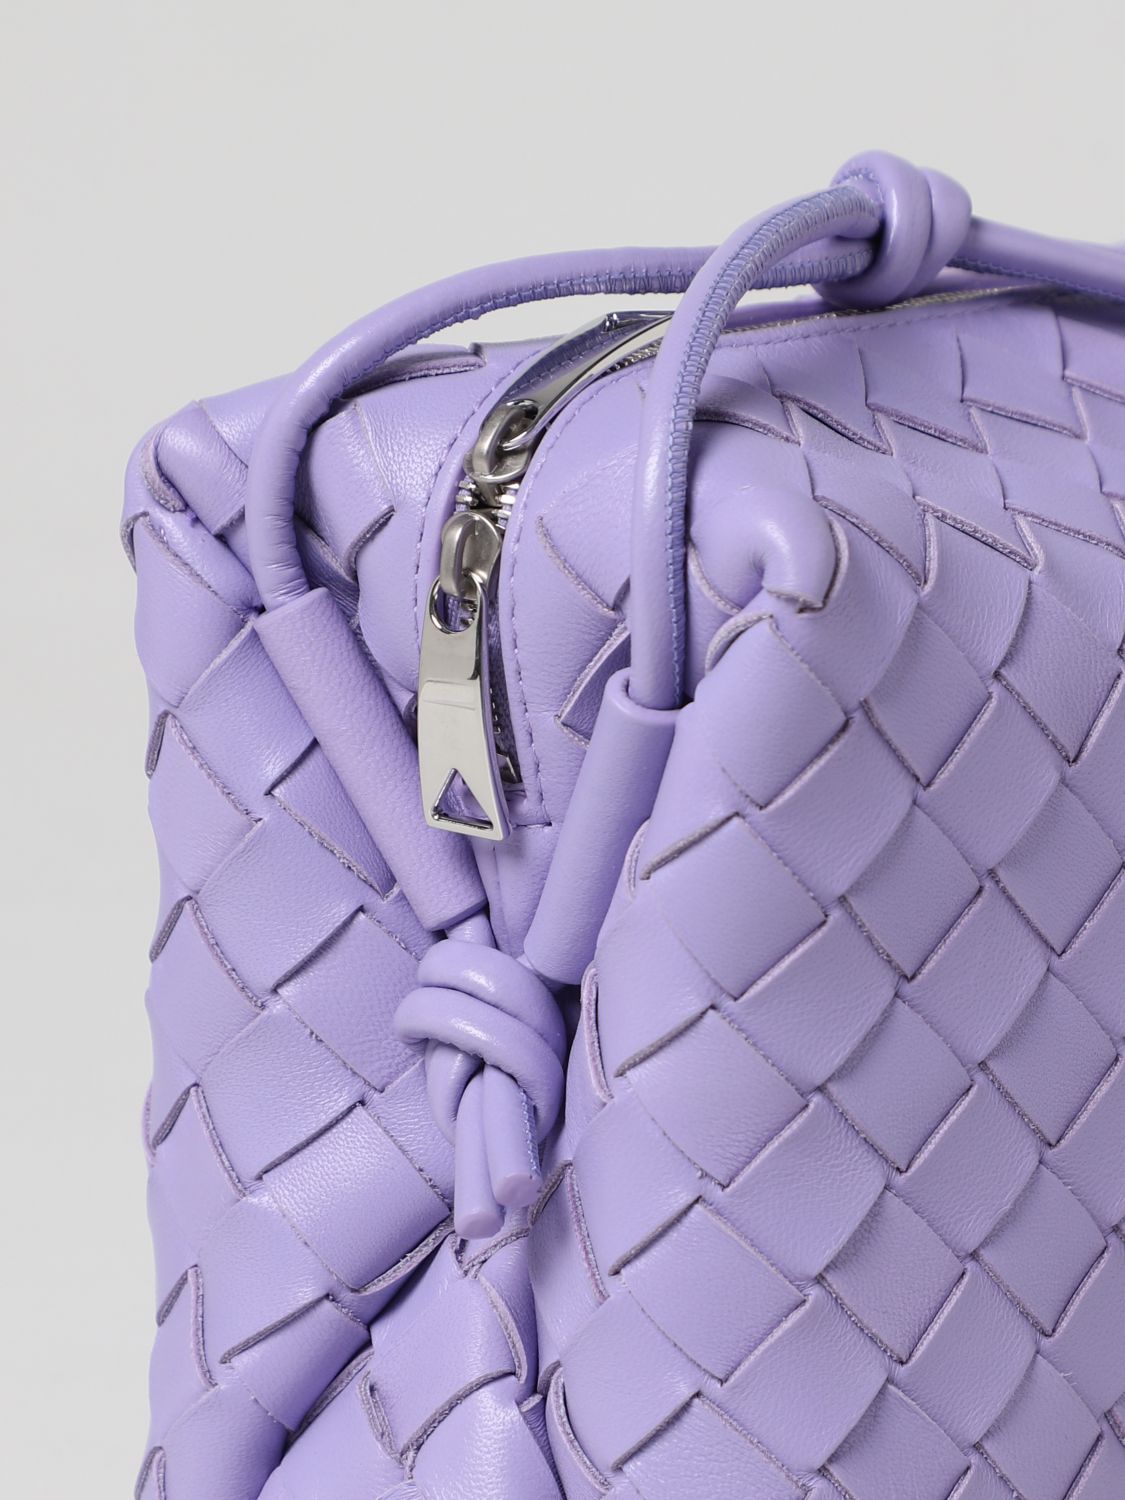 BOTTEGA VENETA: Loop intrecciato leather bag - Violet  Bottega Veneta  crossbody bags 680255V1G11 online on